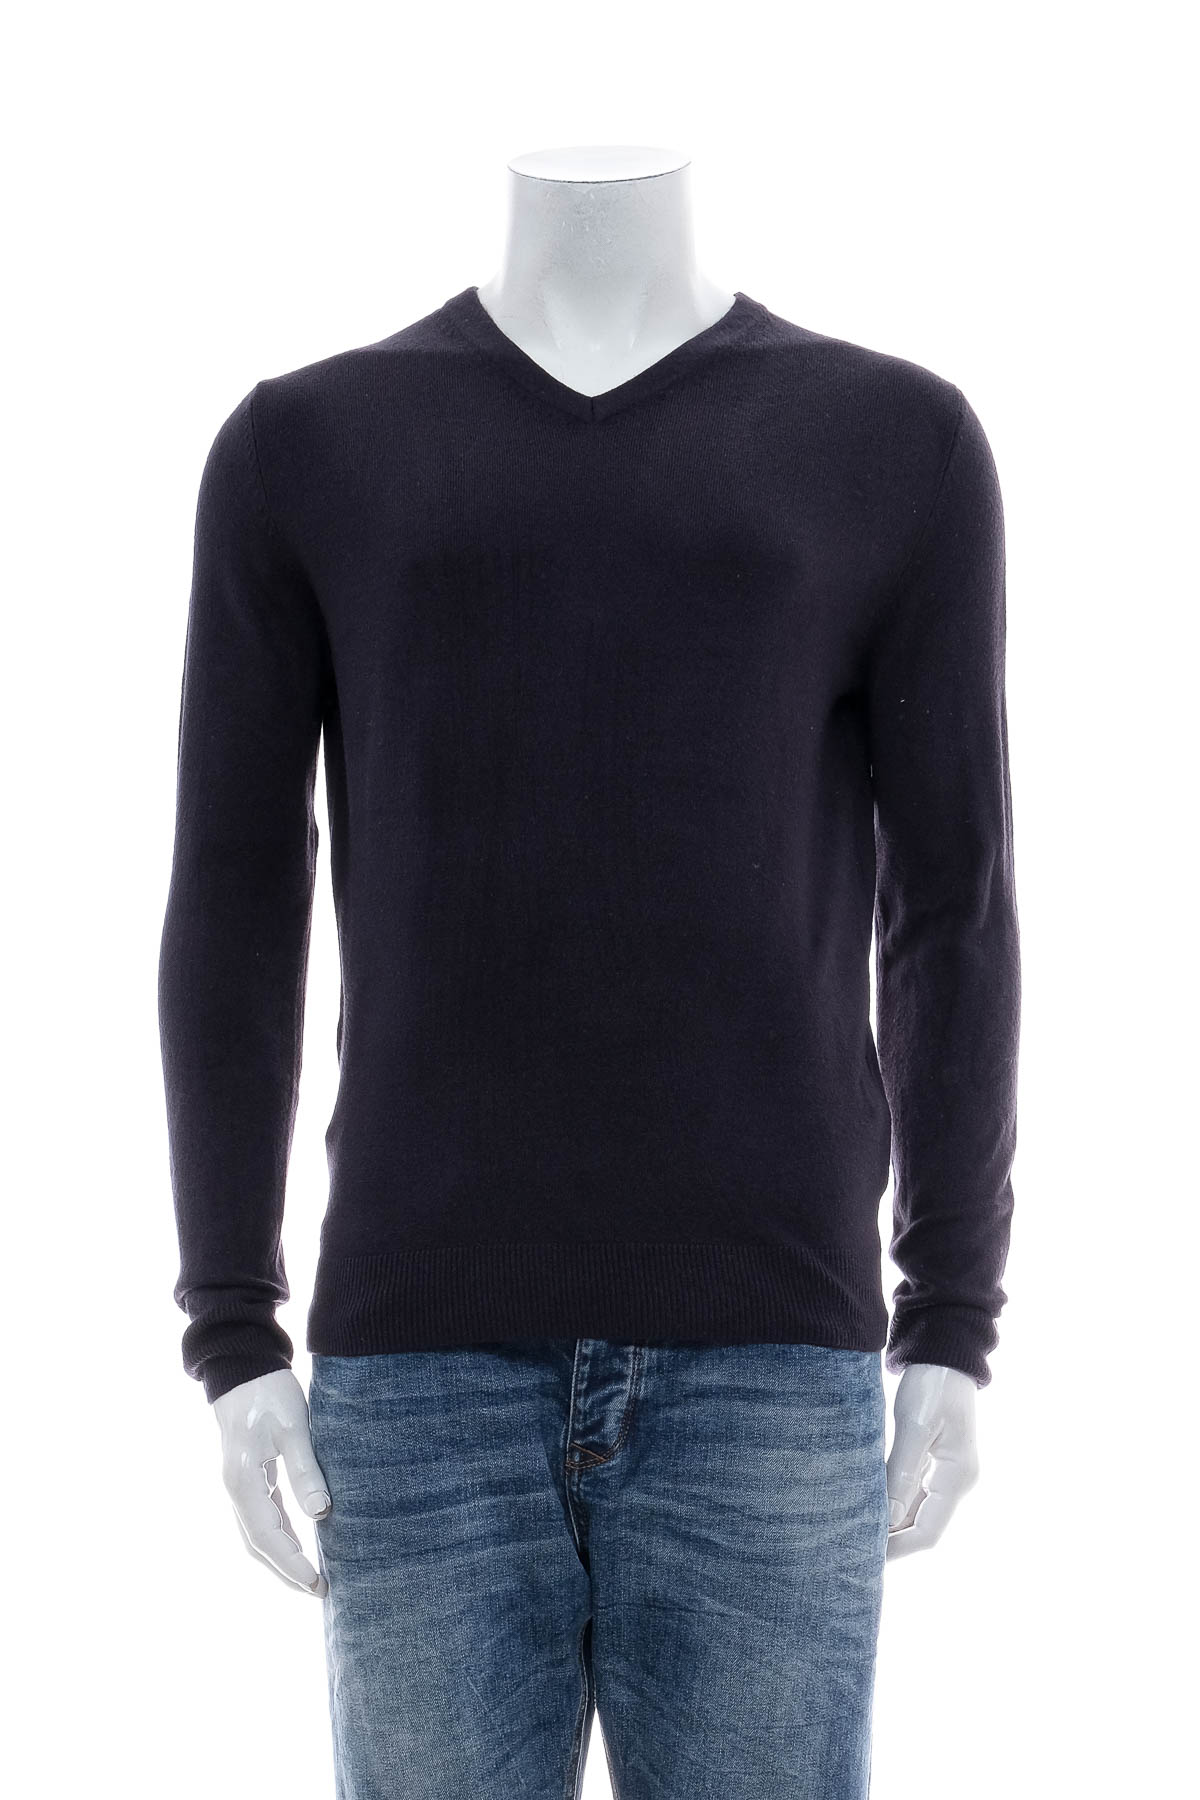 Men's sweater - The Basics x C&A - 0